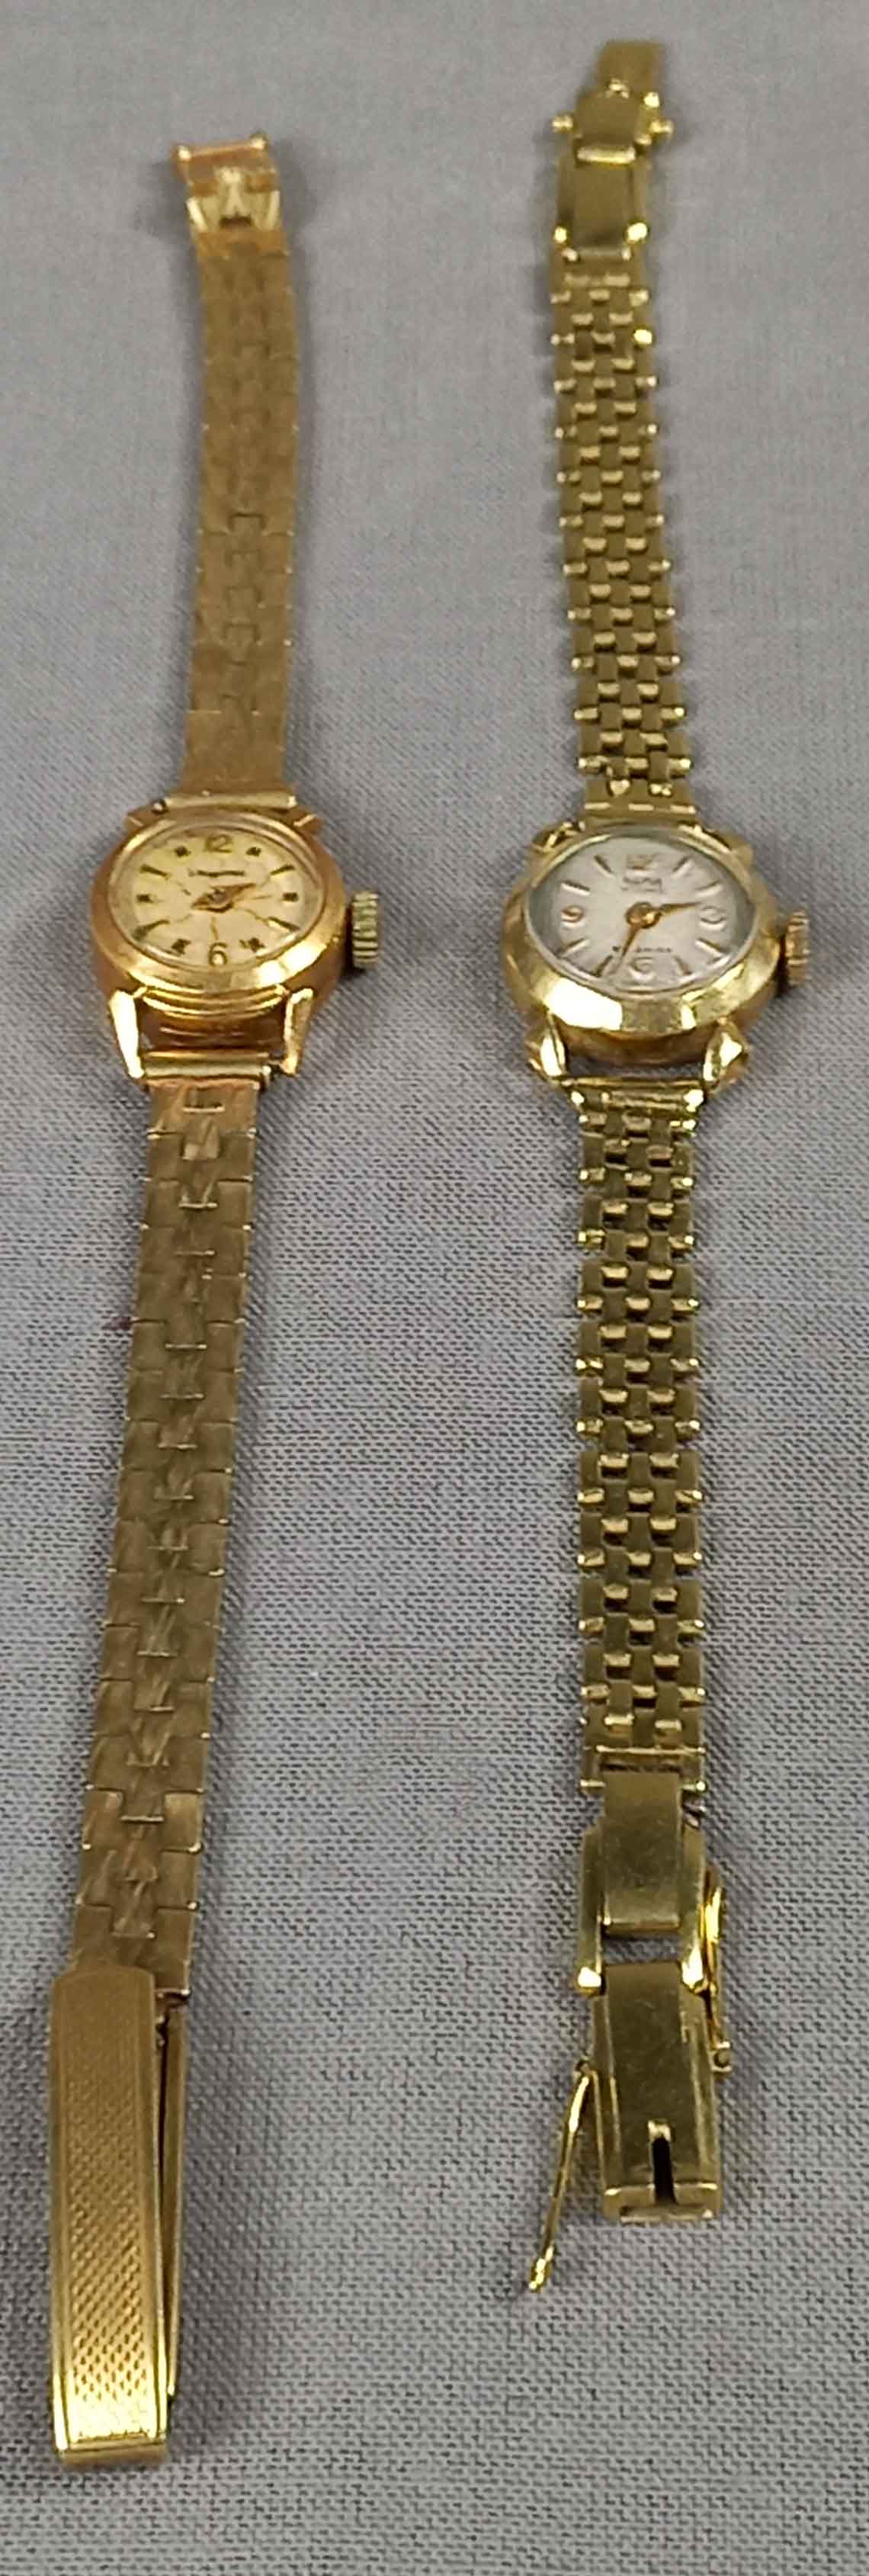 Gelb - Gold 585. 2 Damen Armbanduhren. - Image 2 of 11